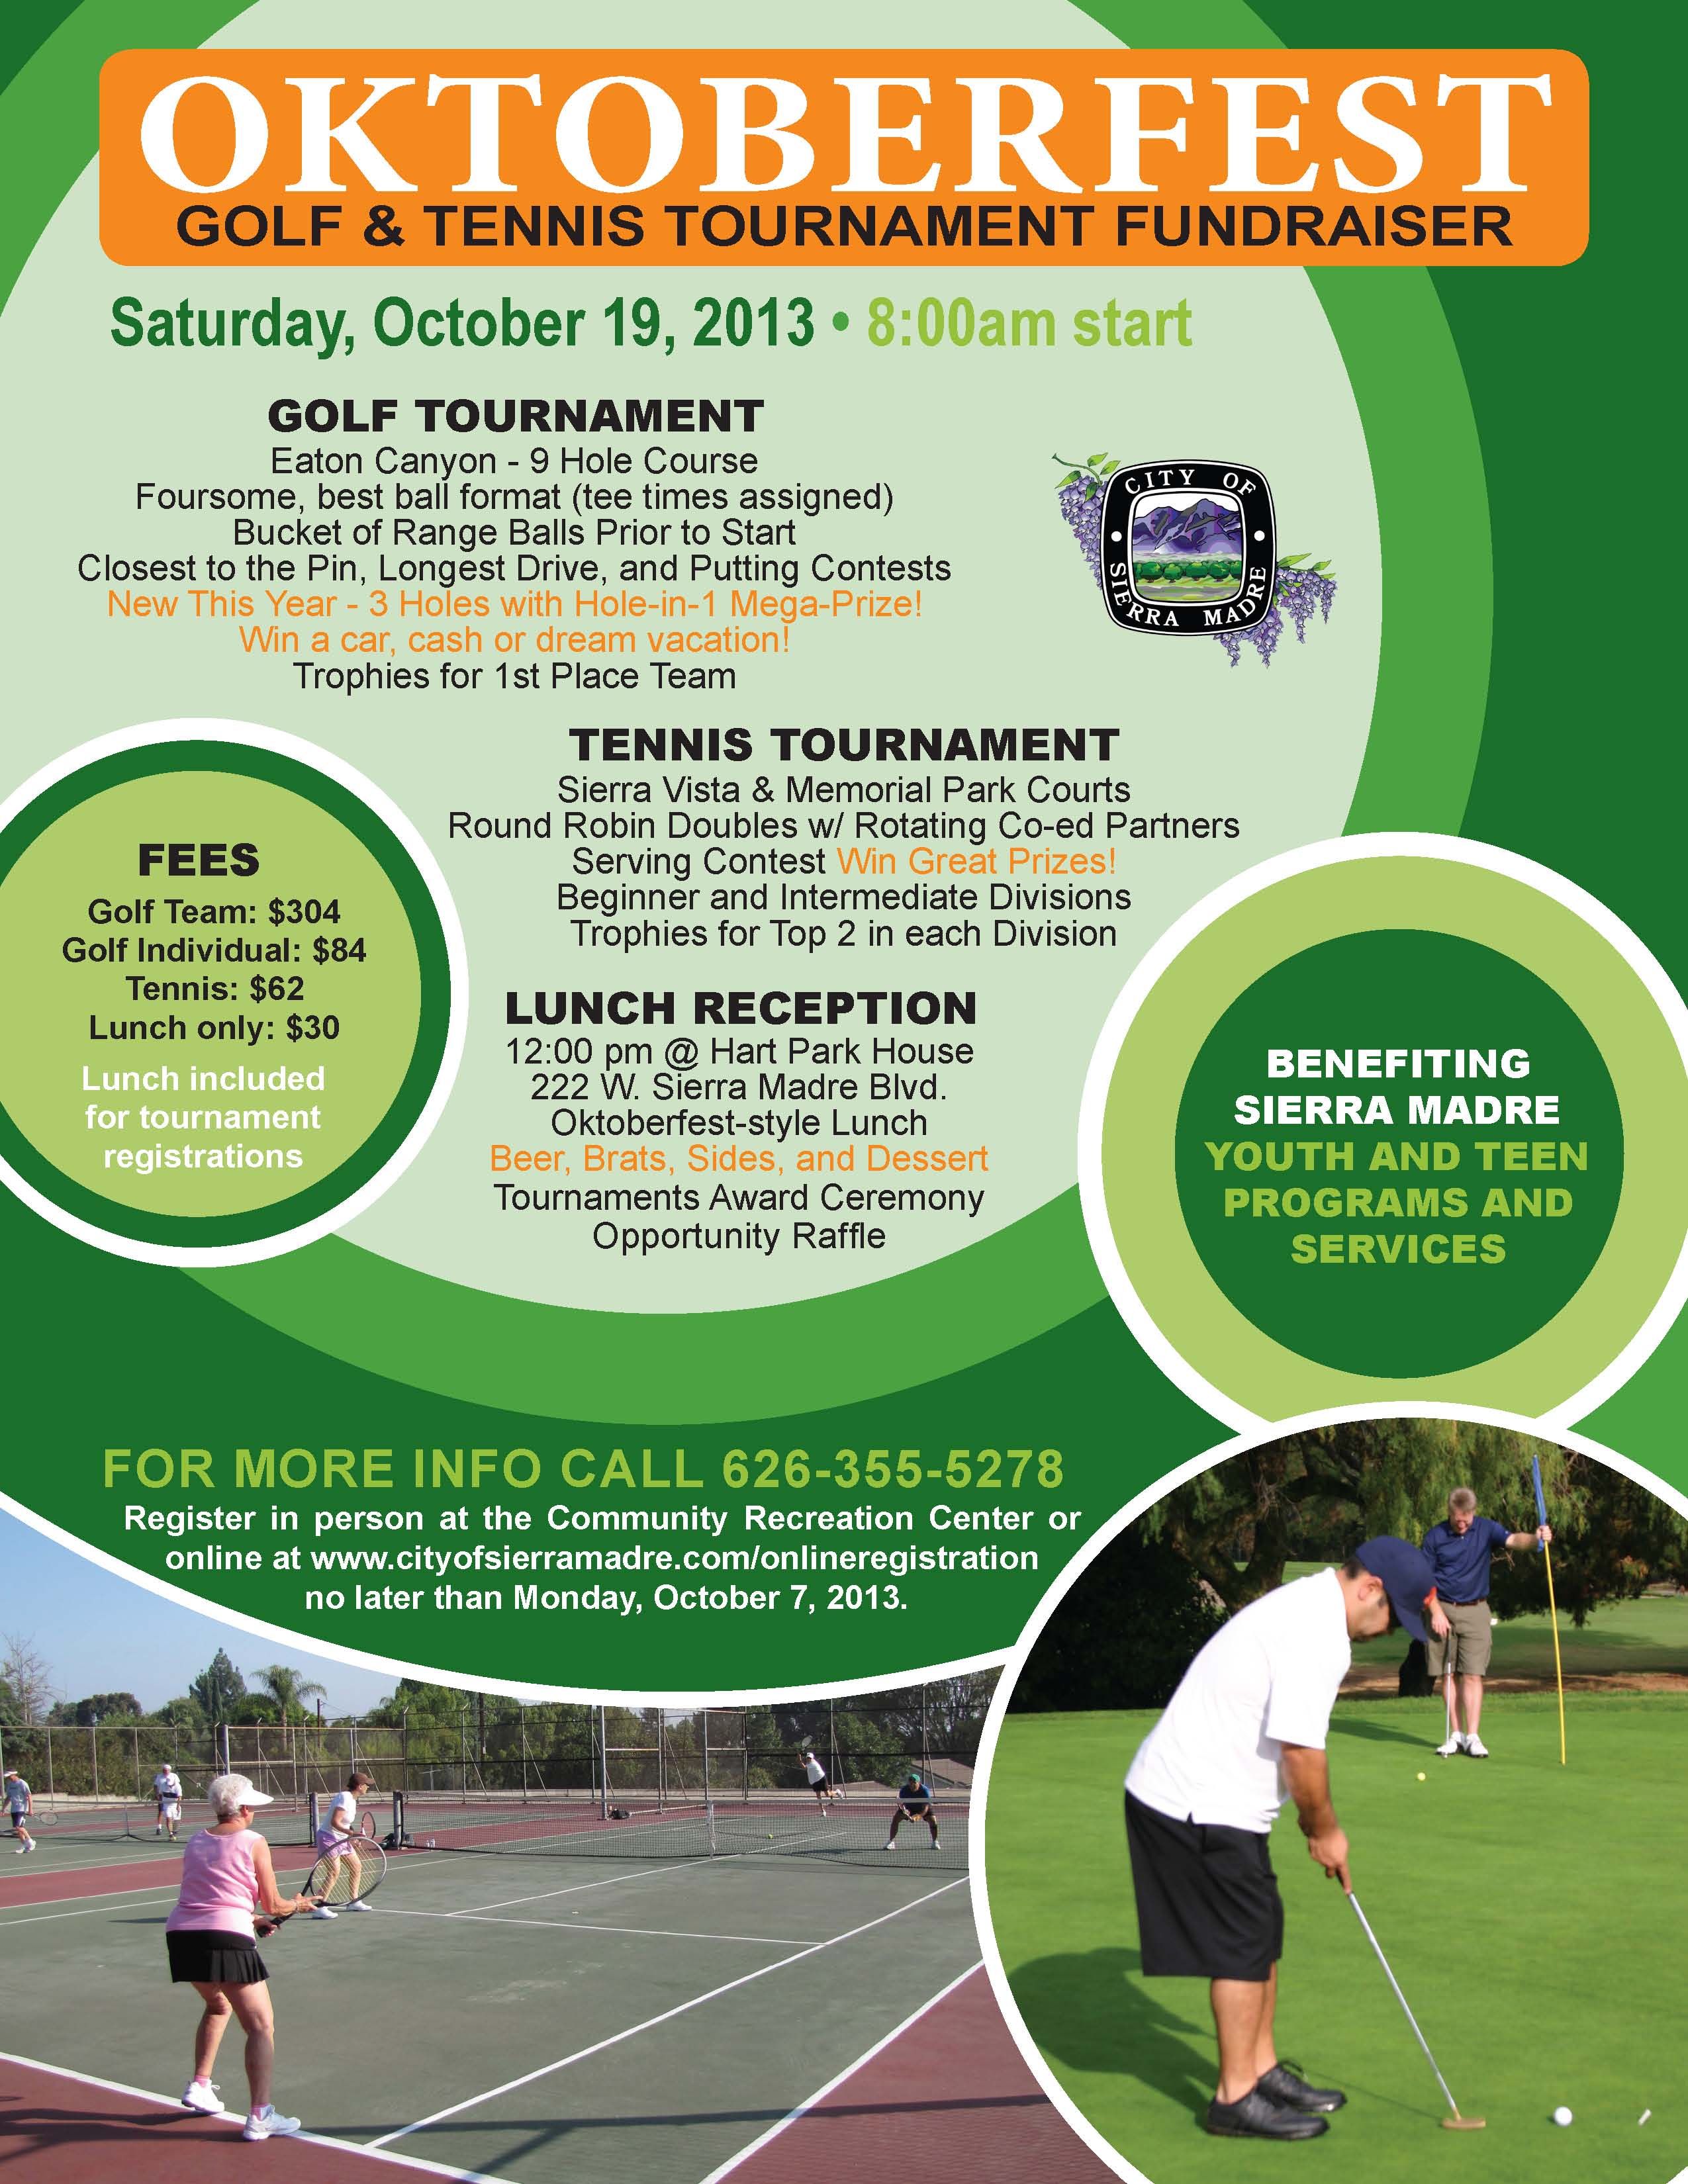 Annual Oktoberfest Golf And Tennis Tournament Fundraiser Saturday October 19th Register Now